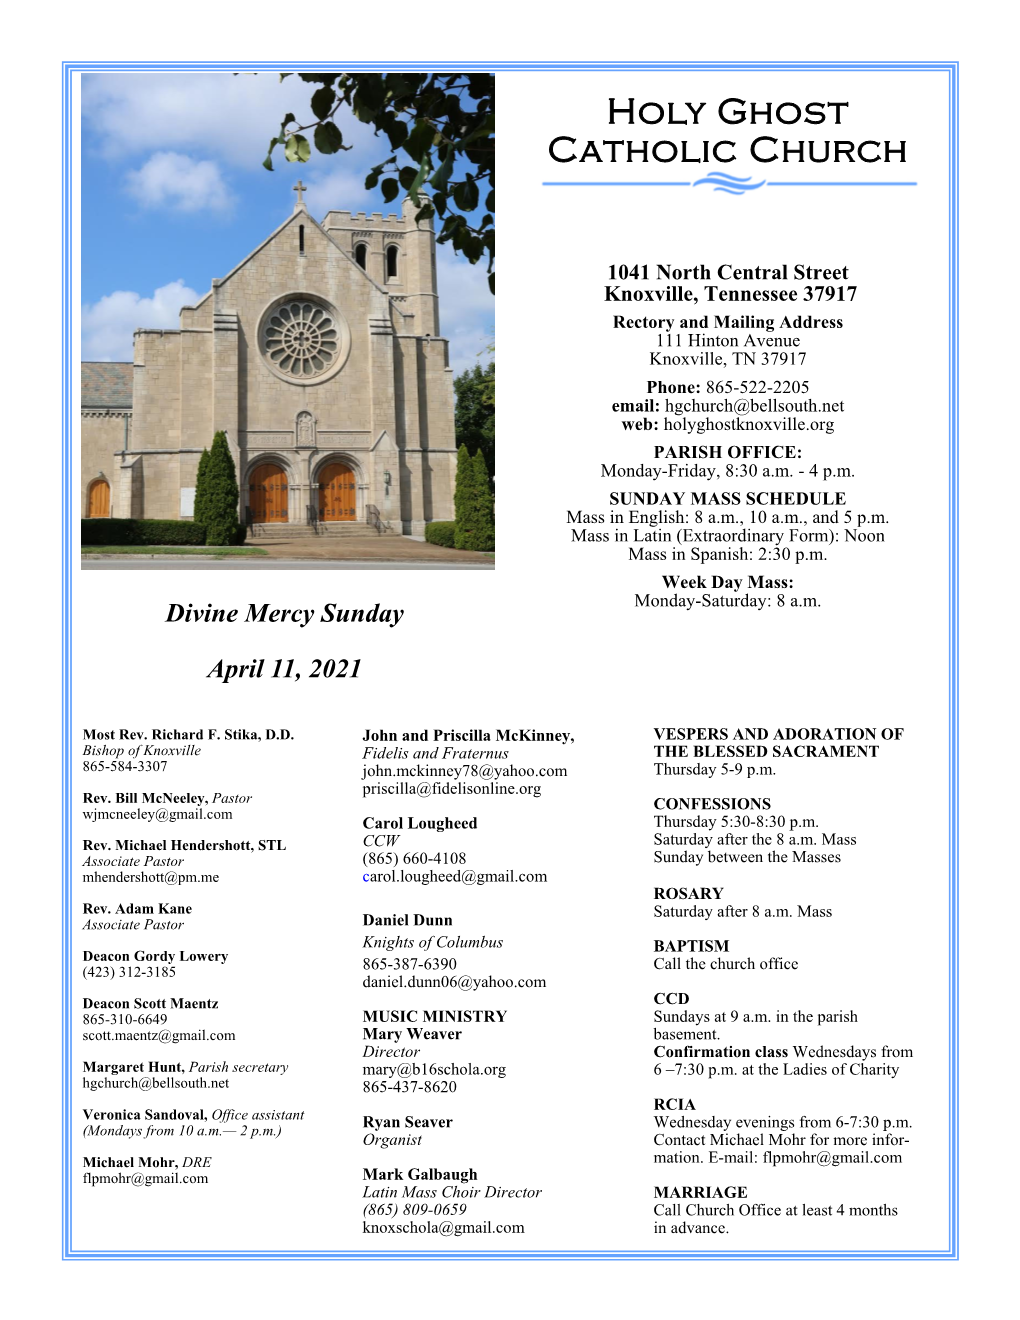 Bulletin for Divine Mercy Sunday